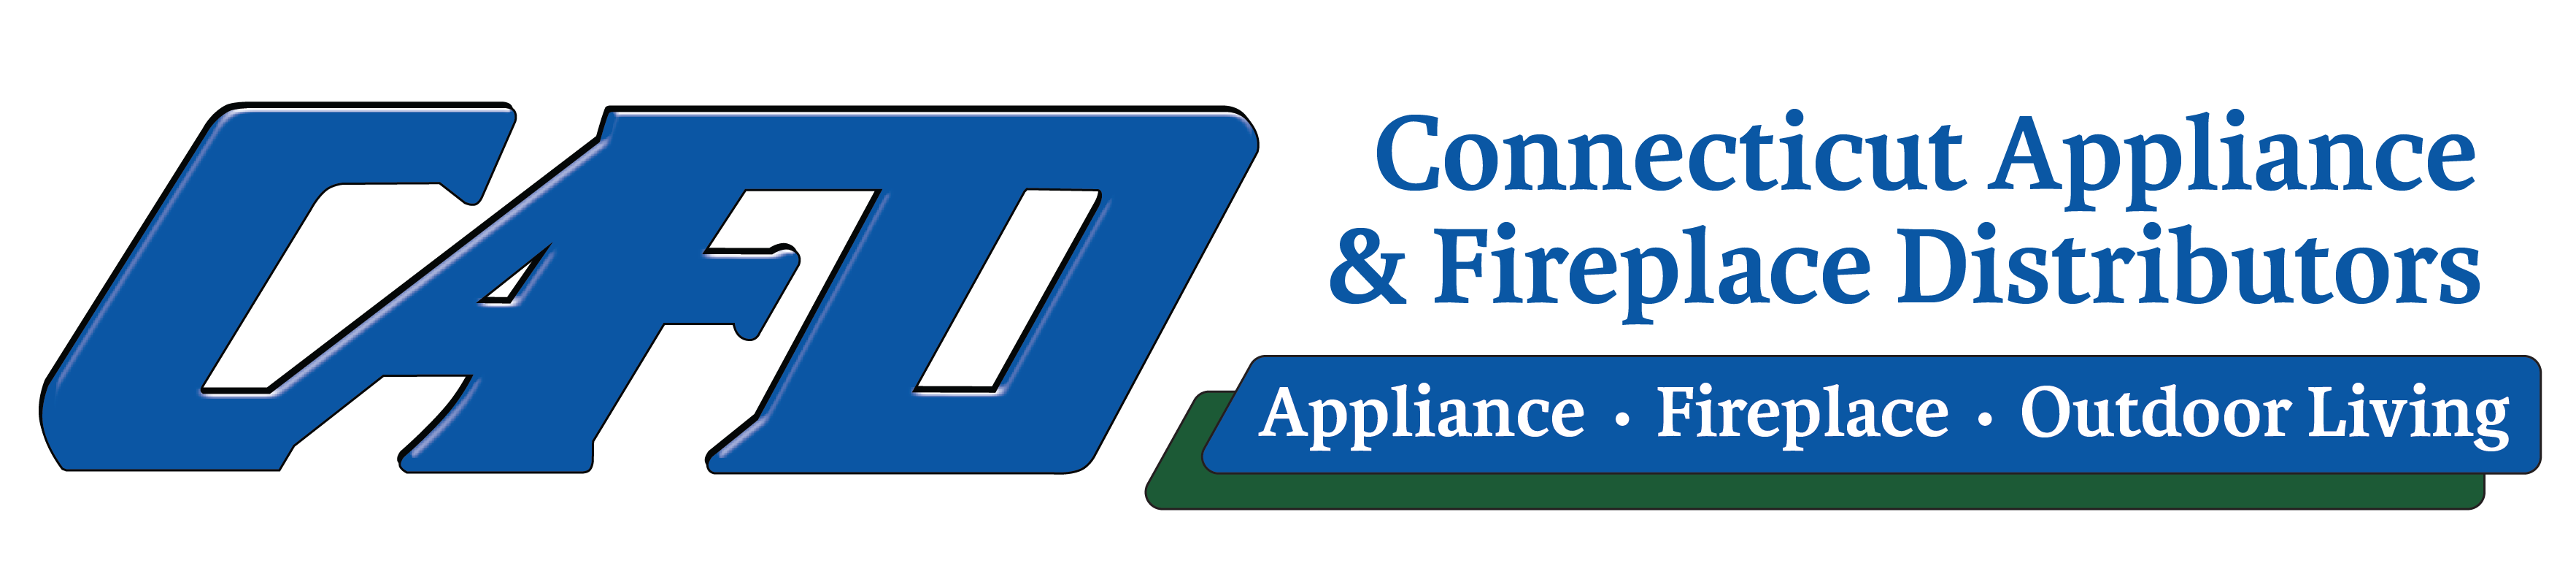 CAFD: CT Appliance & Fireplace Distibutors